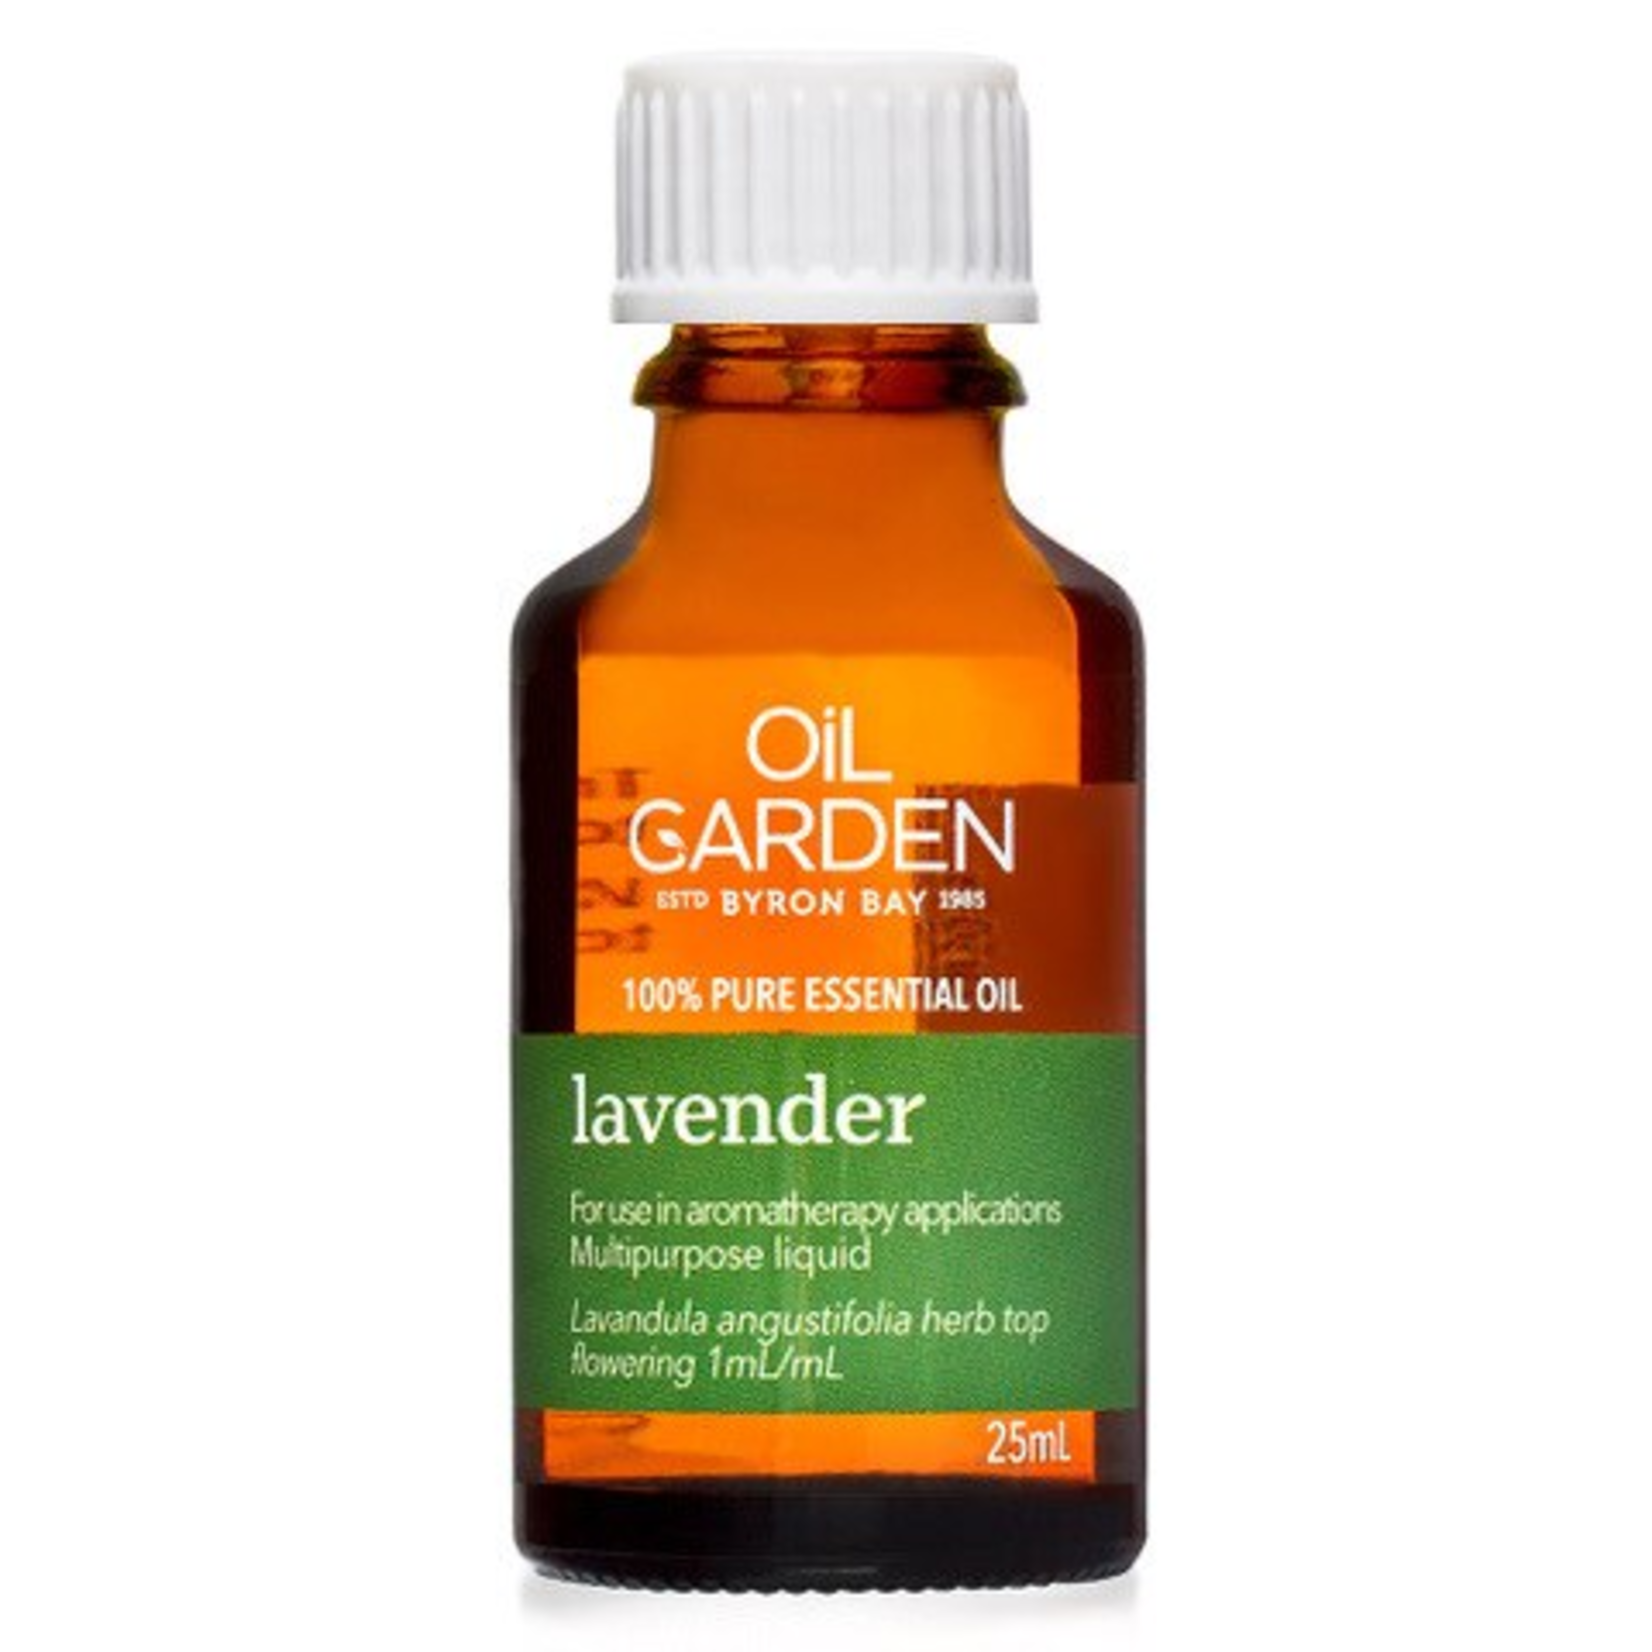 Oil Garden Oil Garden Essential Oil Lavender 25ml